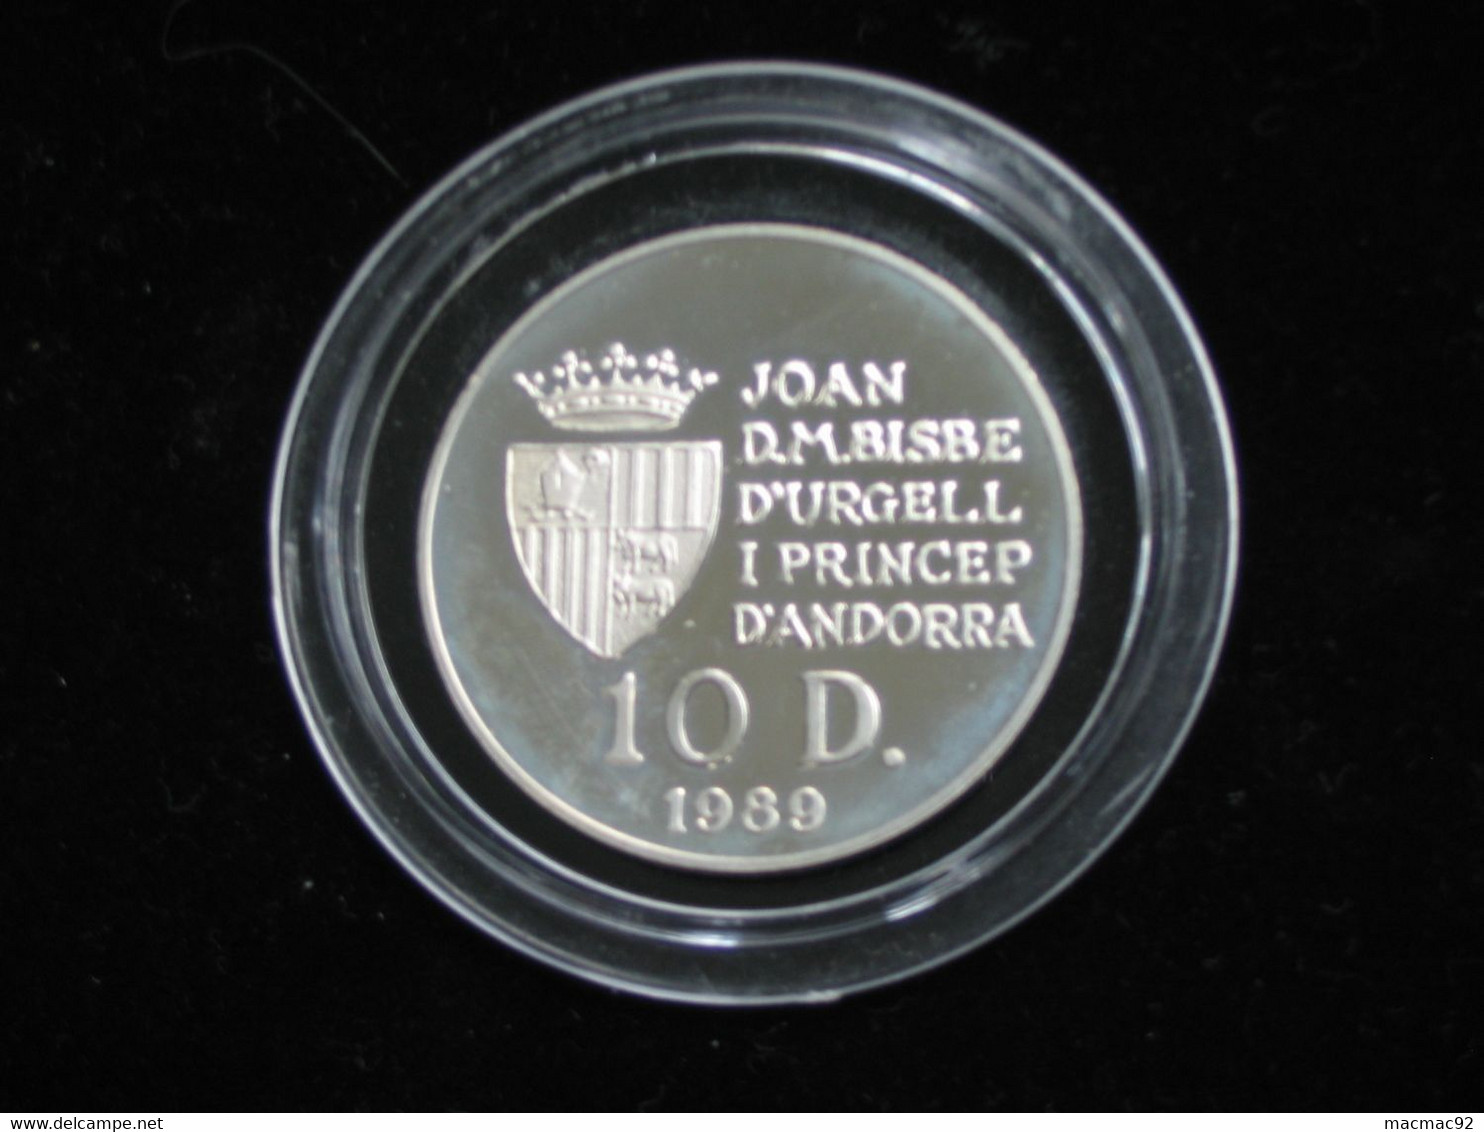 Médaille En Argent Pur - XXV Olimpiada Barcelona 1992 - Joan D.M.Bisbe D'Urgell I Princep   **** EN ACHAT IMMEDIAT **** - Professionals / Firms